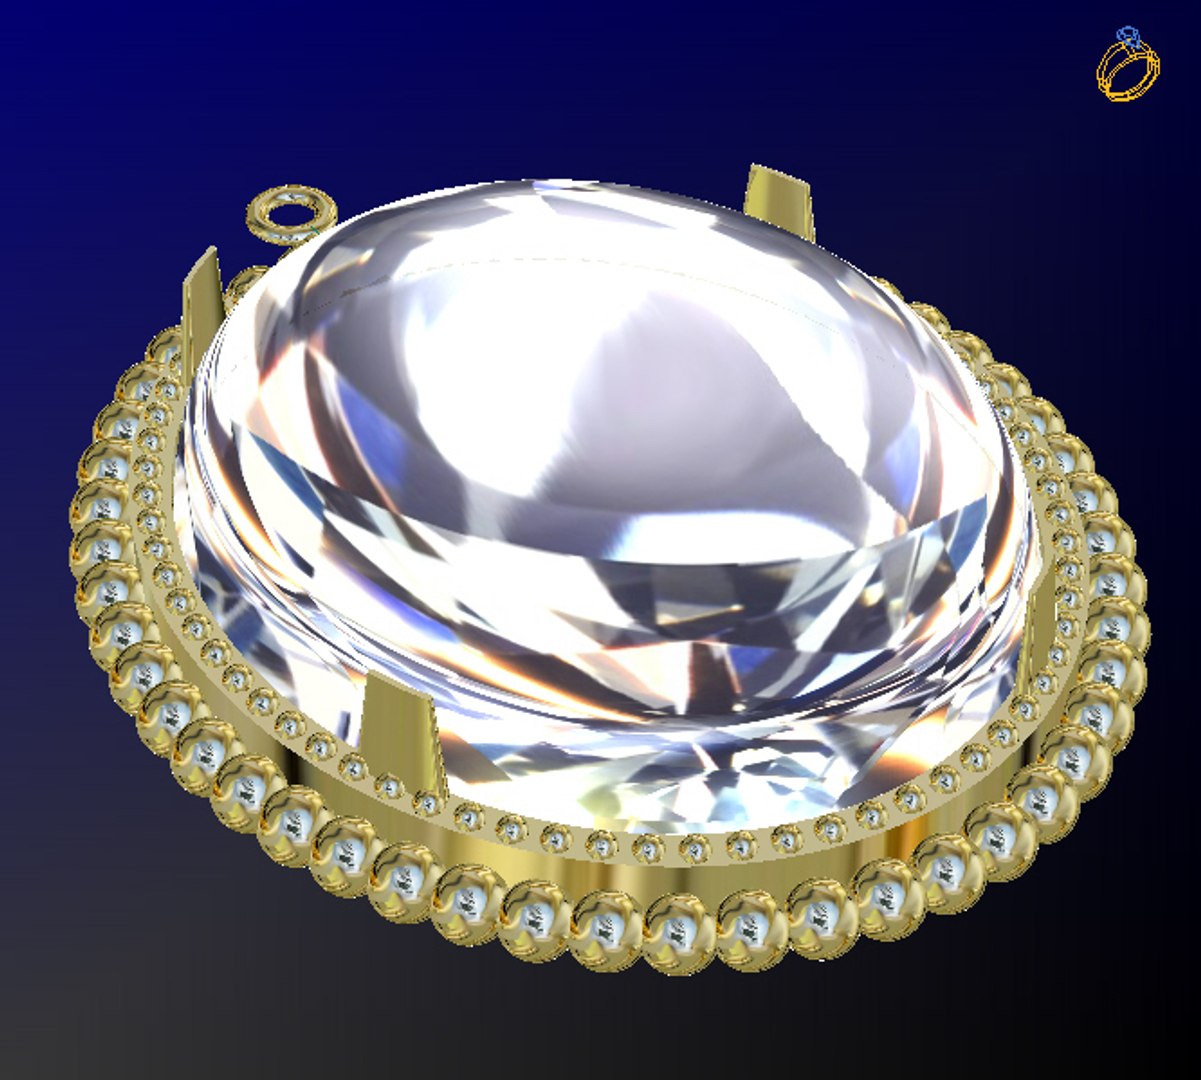 3ds max jewelry jewel gemstone https://p.turbosquid.com/ts-thumb/QO/UVLBNT/9y2CHddH/withstone/jpg/1364888648/1920x1080/fit_q87/b7eafc8bb2379b7899e5b3edd4b59bc720680eac/withstone.jpg